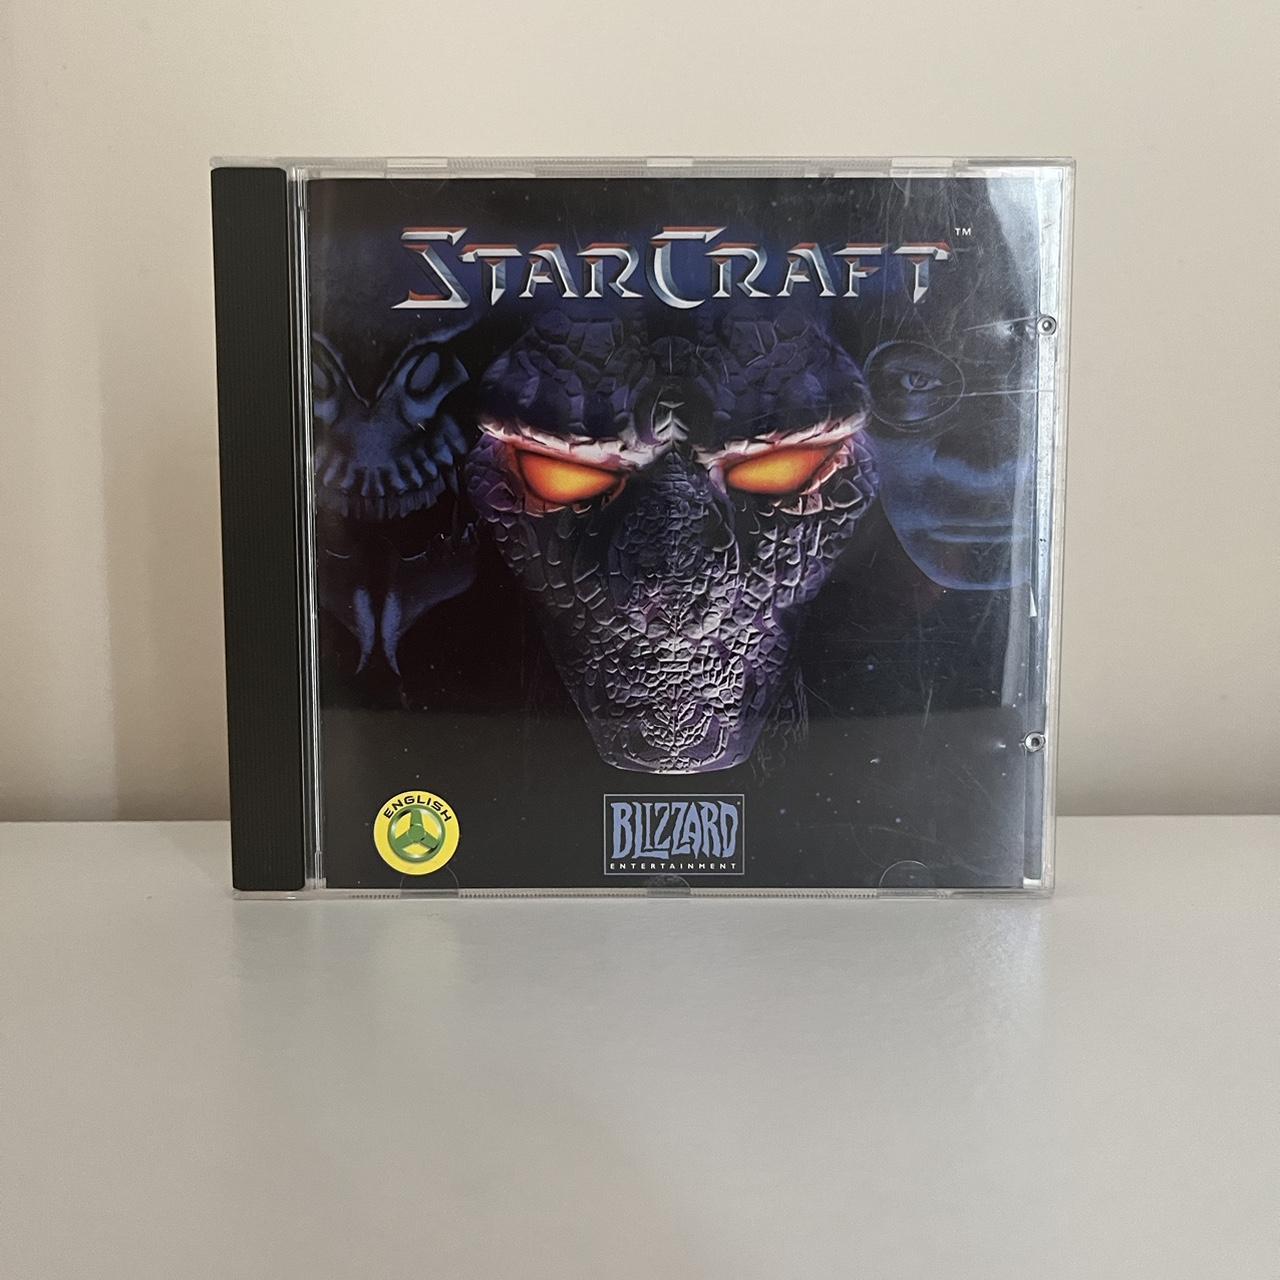 Starcraft Jewel Case PC Game CD Rom Immerse... - Depop